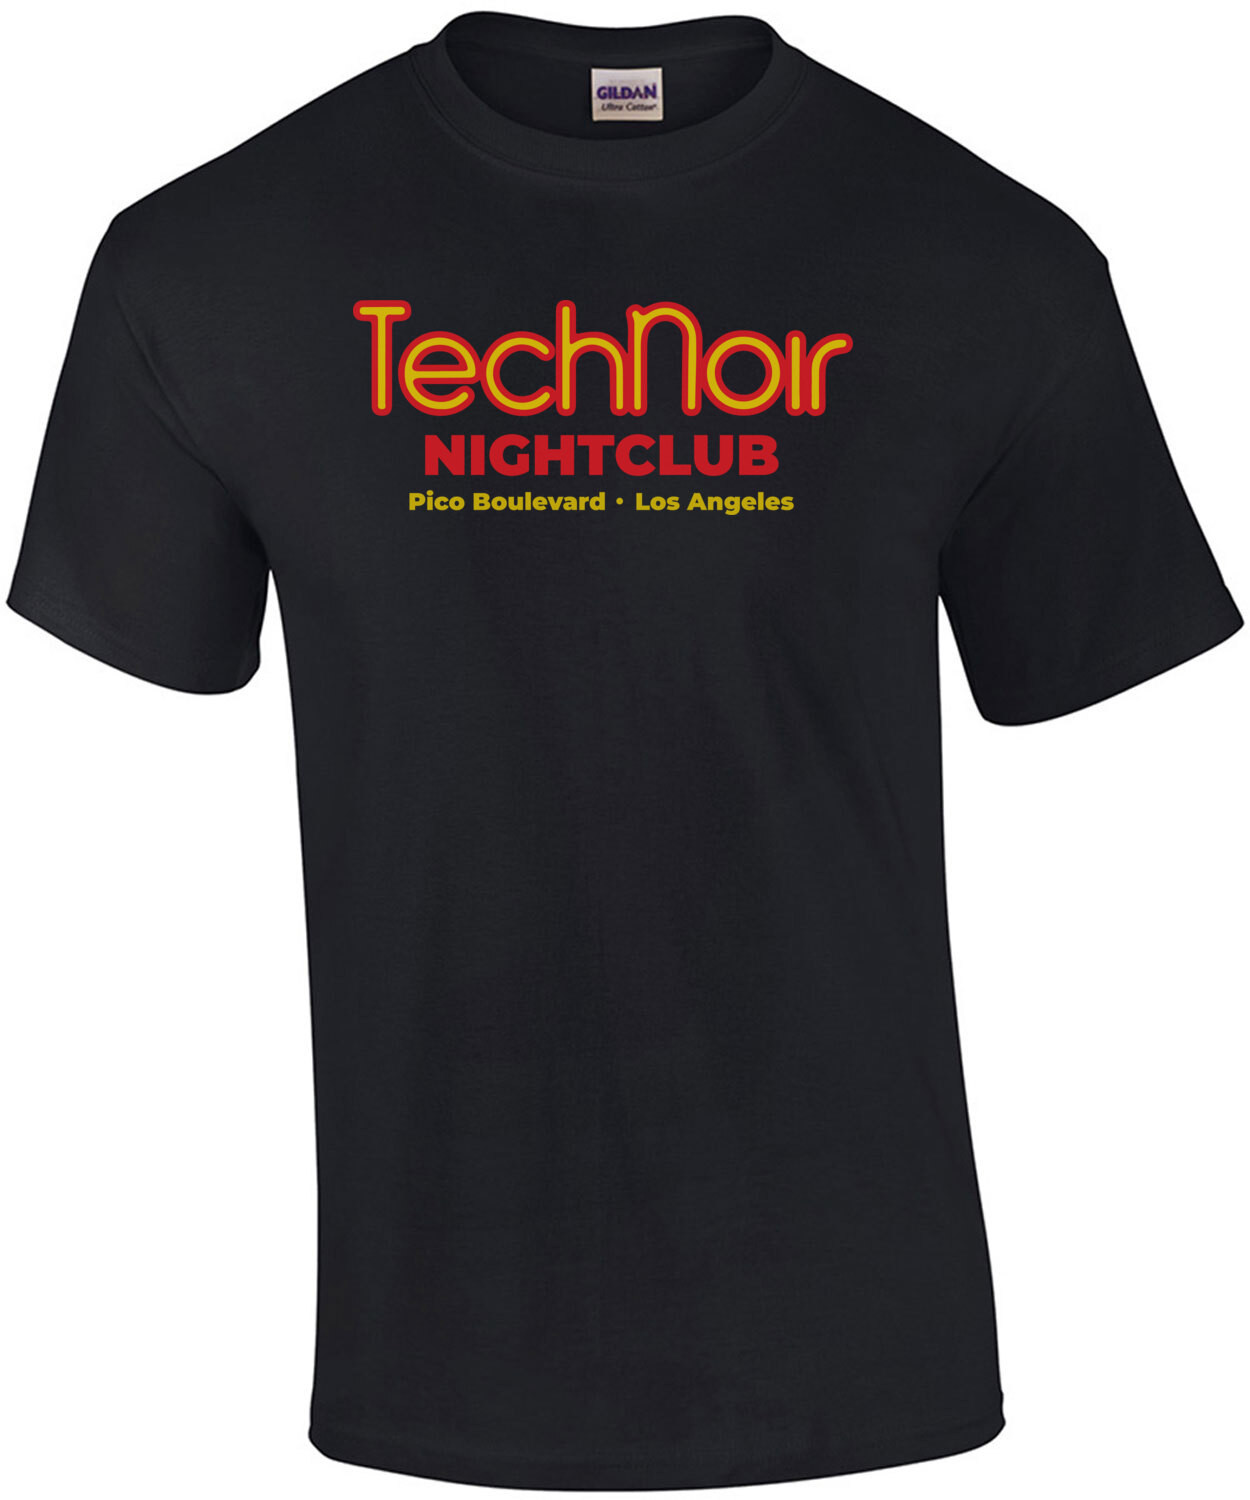 TechNoir Nightclub - Pico Boulevard - Los Angeles - Terminator - 80's T-Shirt